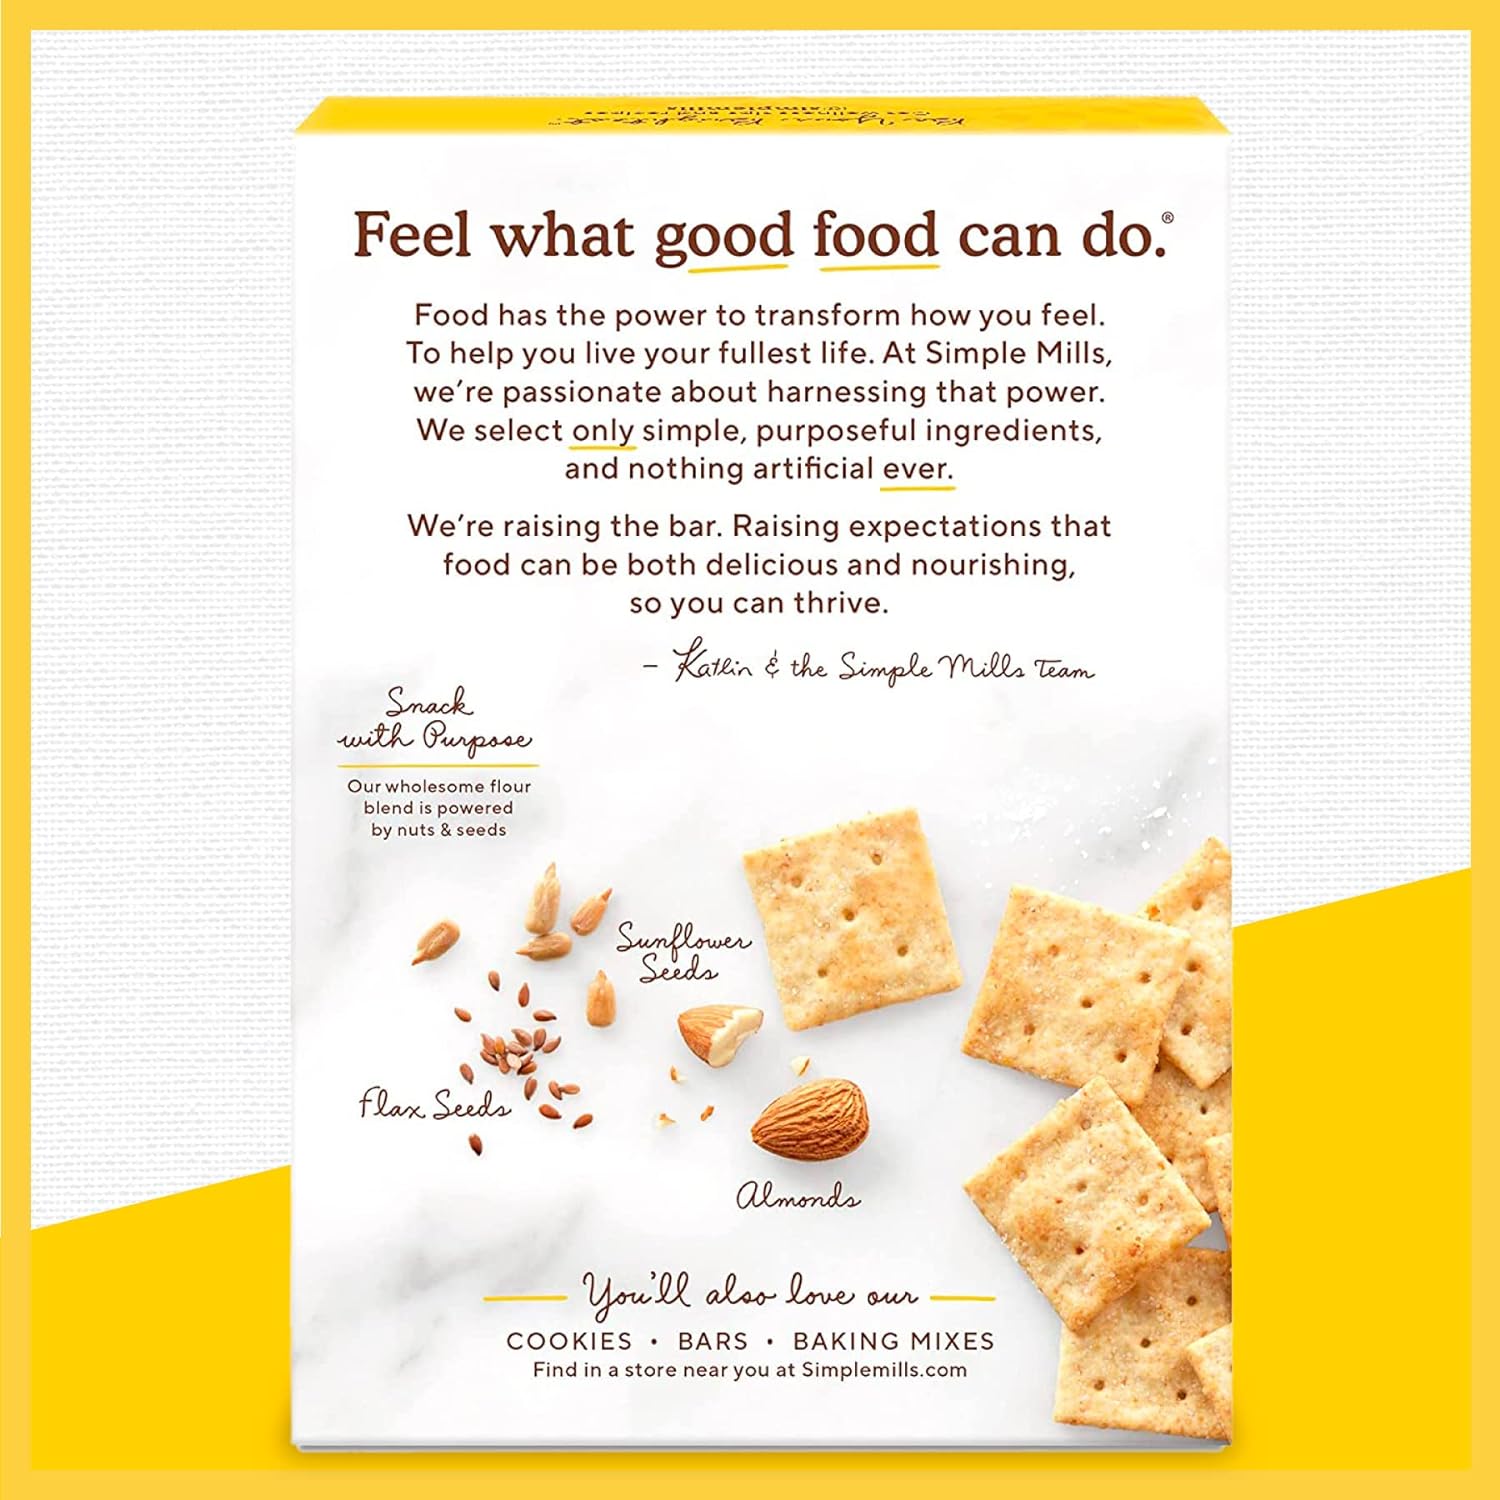 Simple Mills Almond Flour Crackers, Fine Ground Sea Salt - Gluten Free, Vegan, Healthy Snacks, 4.25 Ounce (Pack of 4)